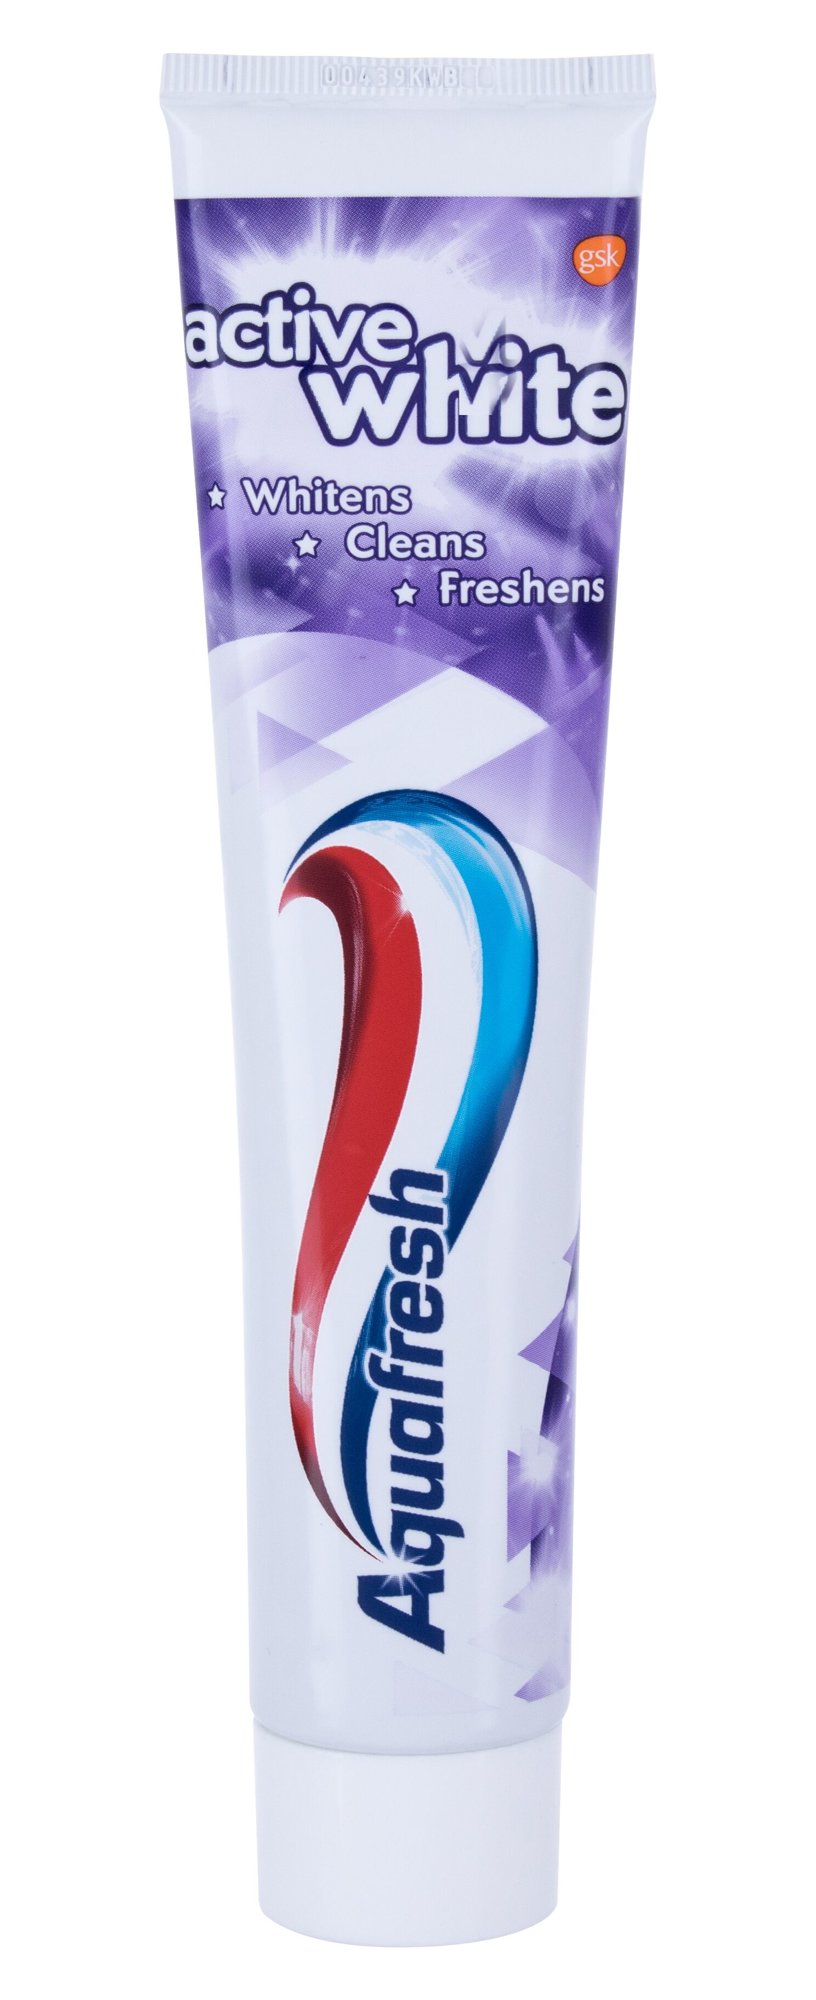 Aquafresh Active White dantų pasta